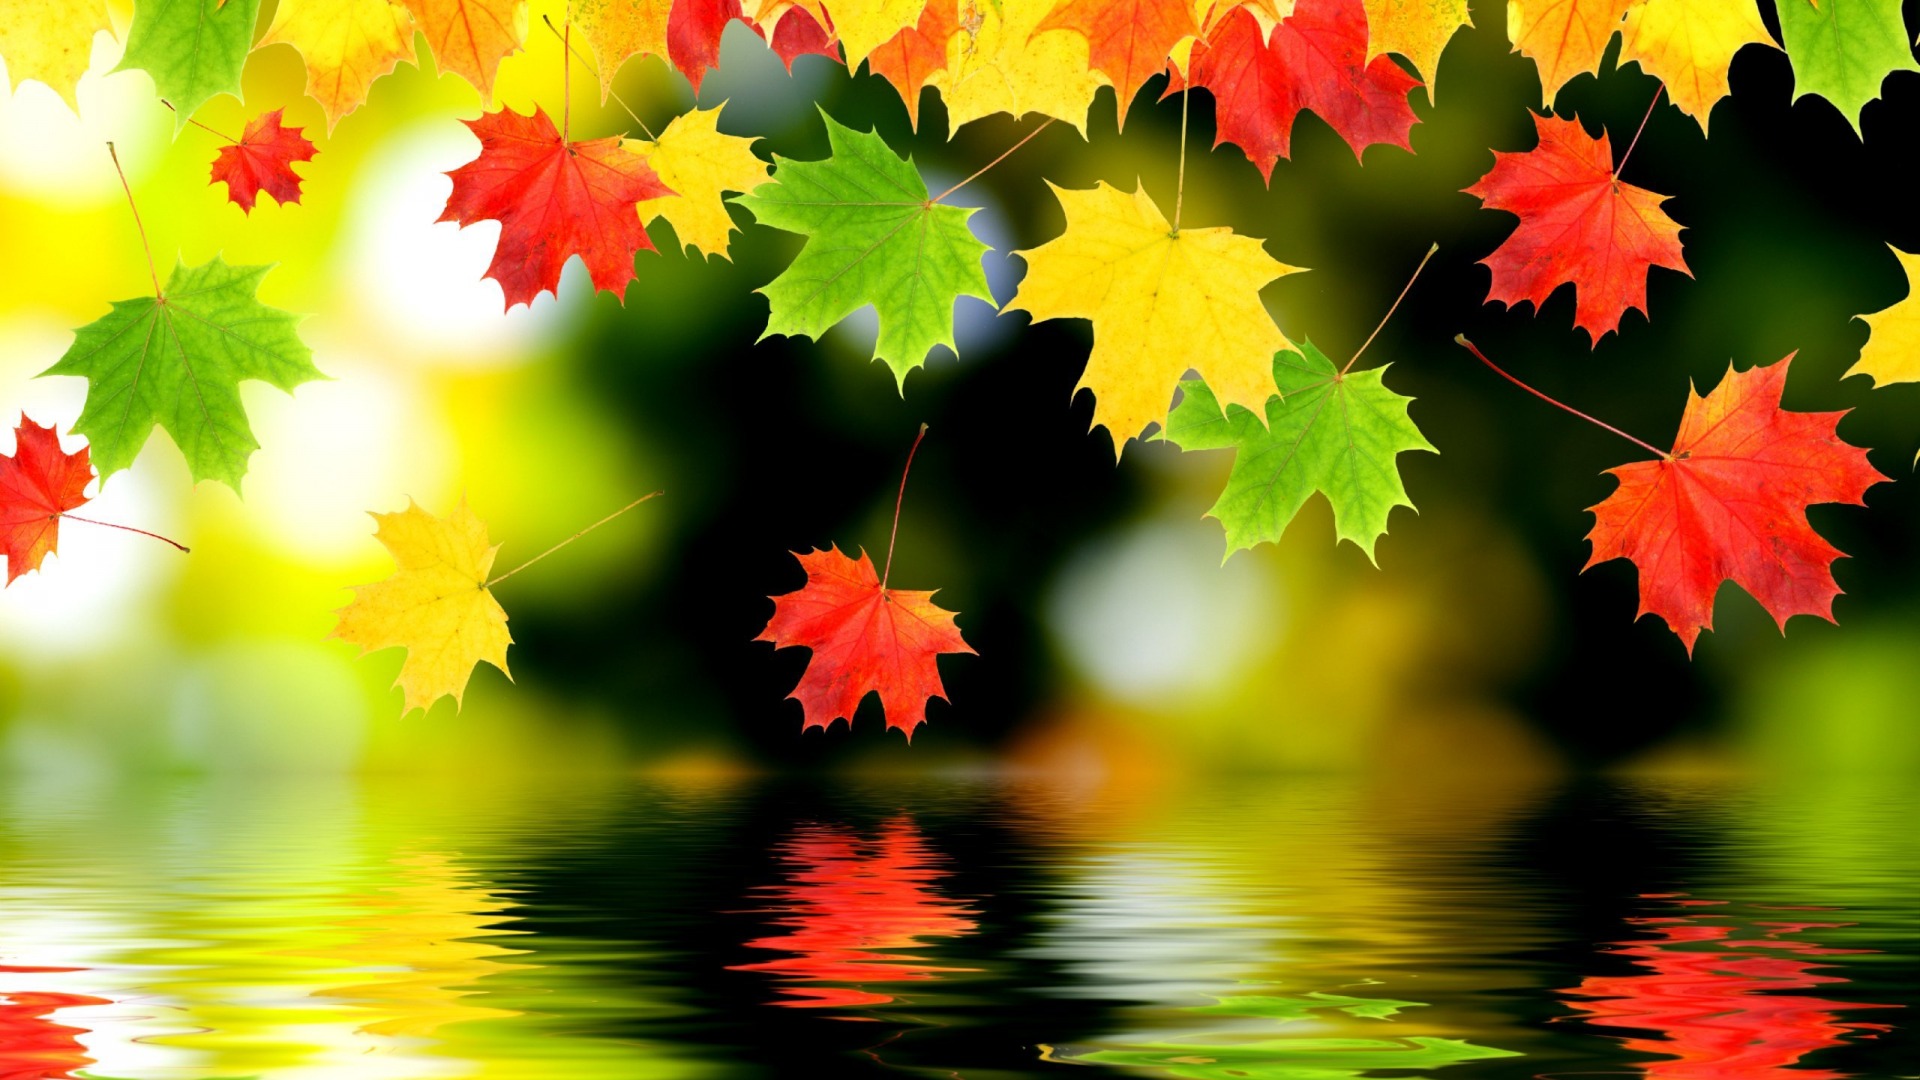 Autumn leaves water reflection maple leaves desktop wallpaper